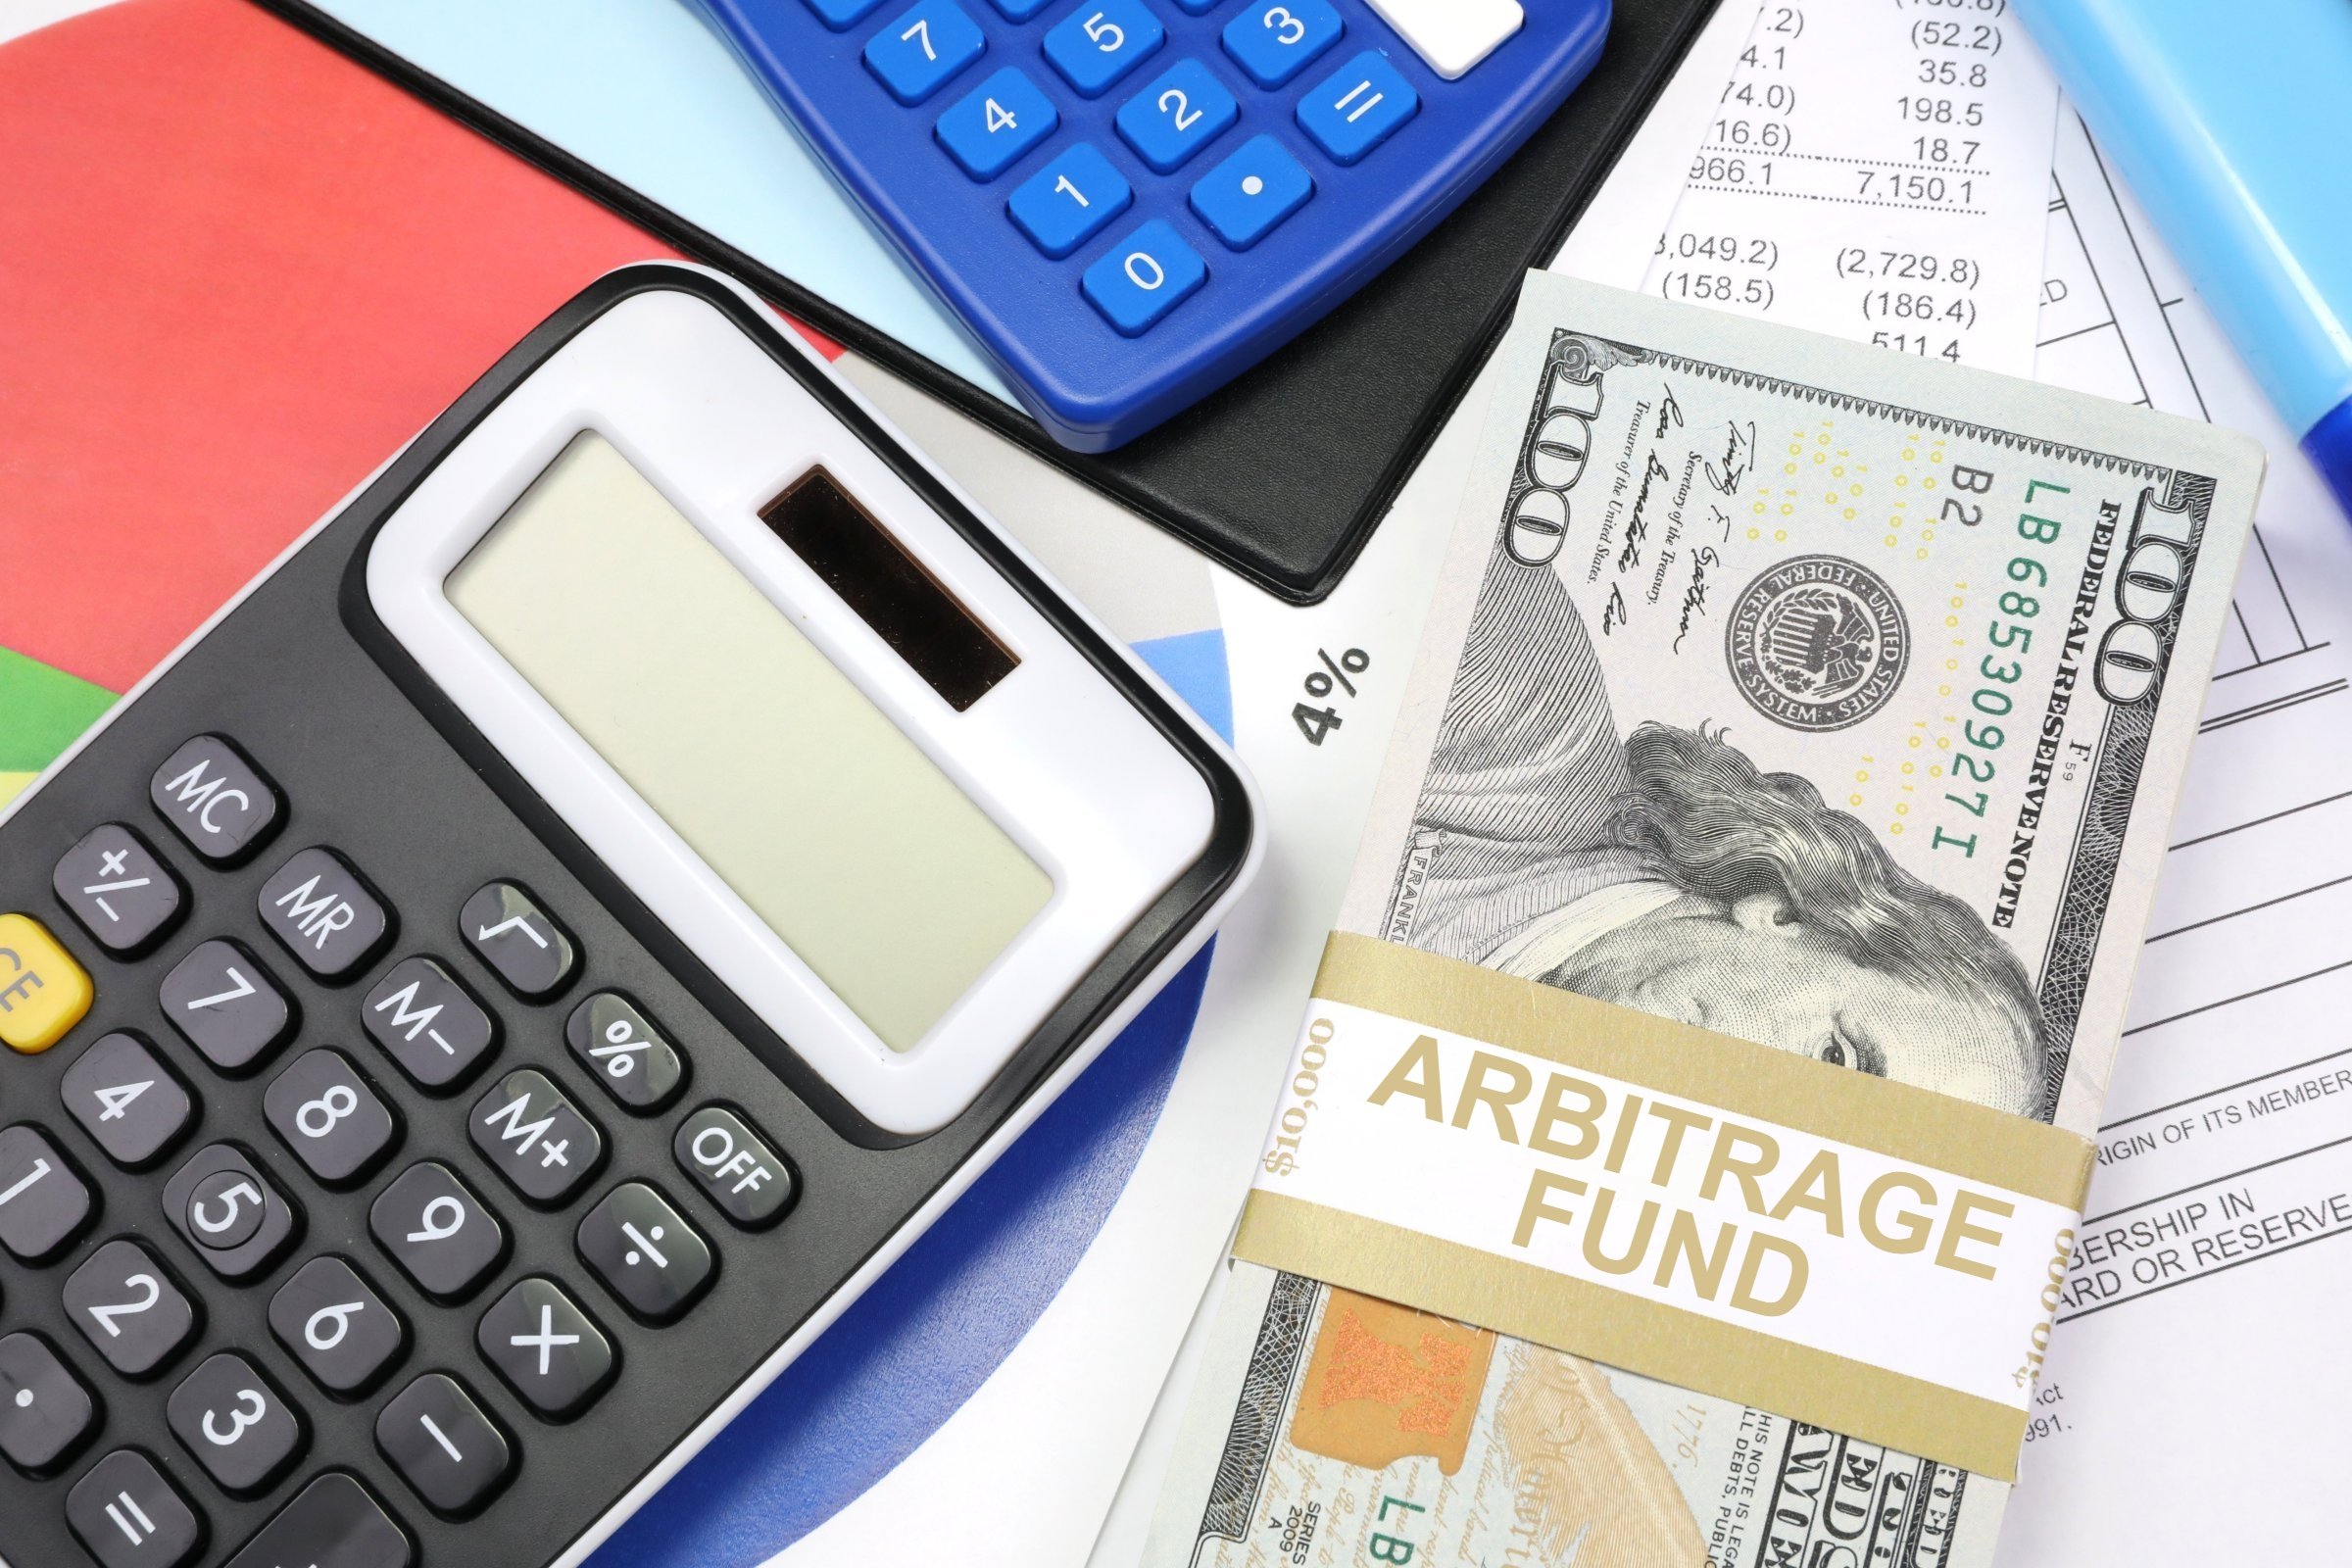 Arbitrage Fund